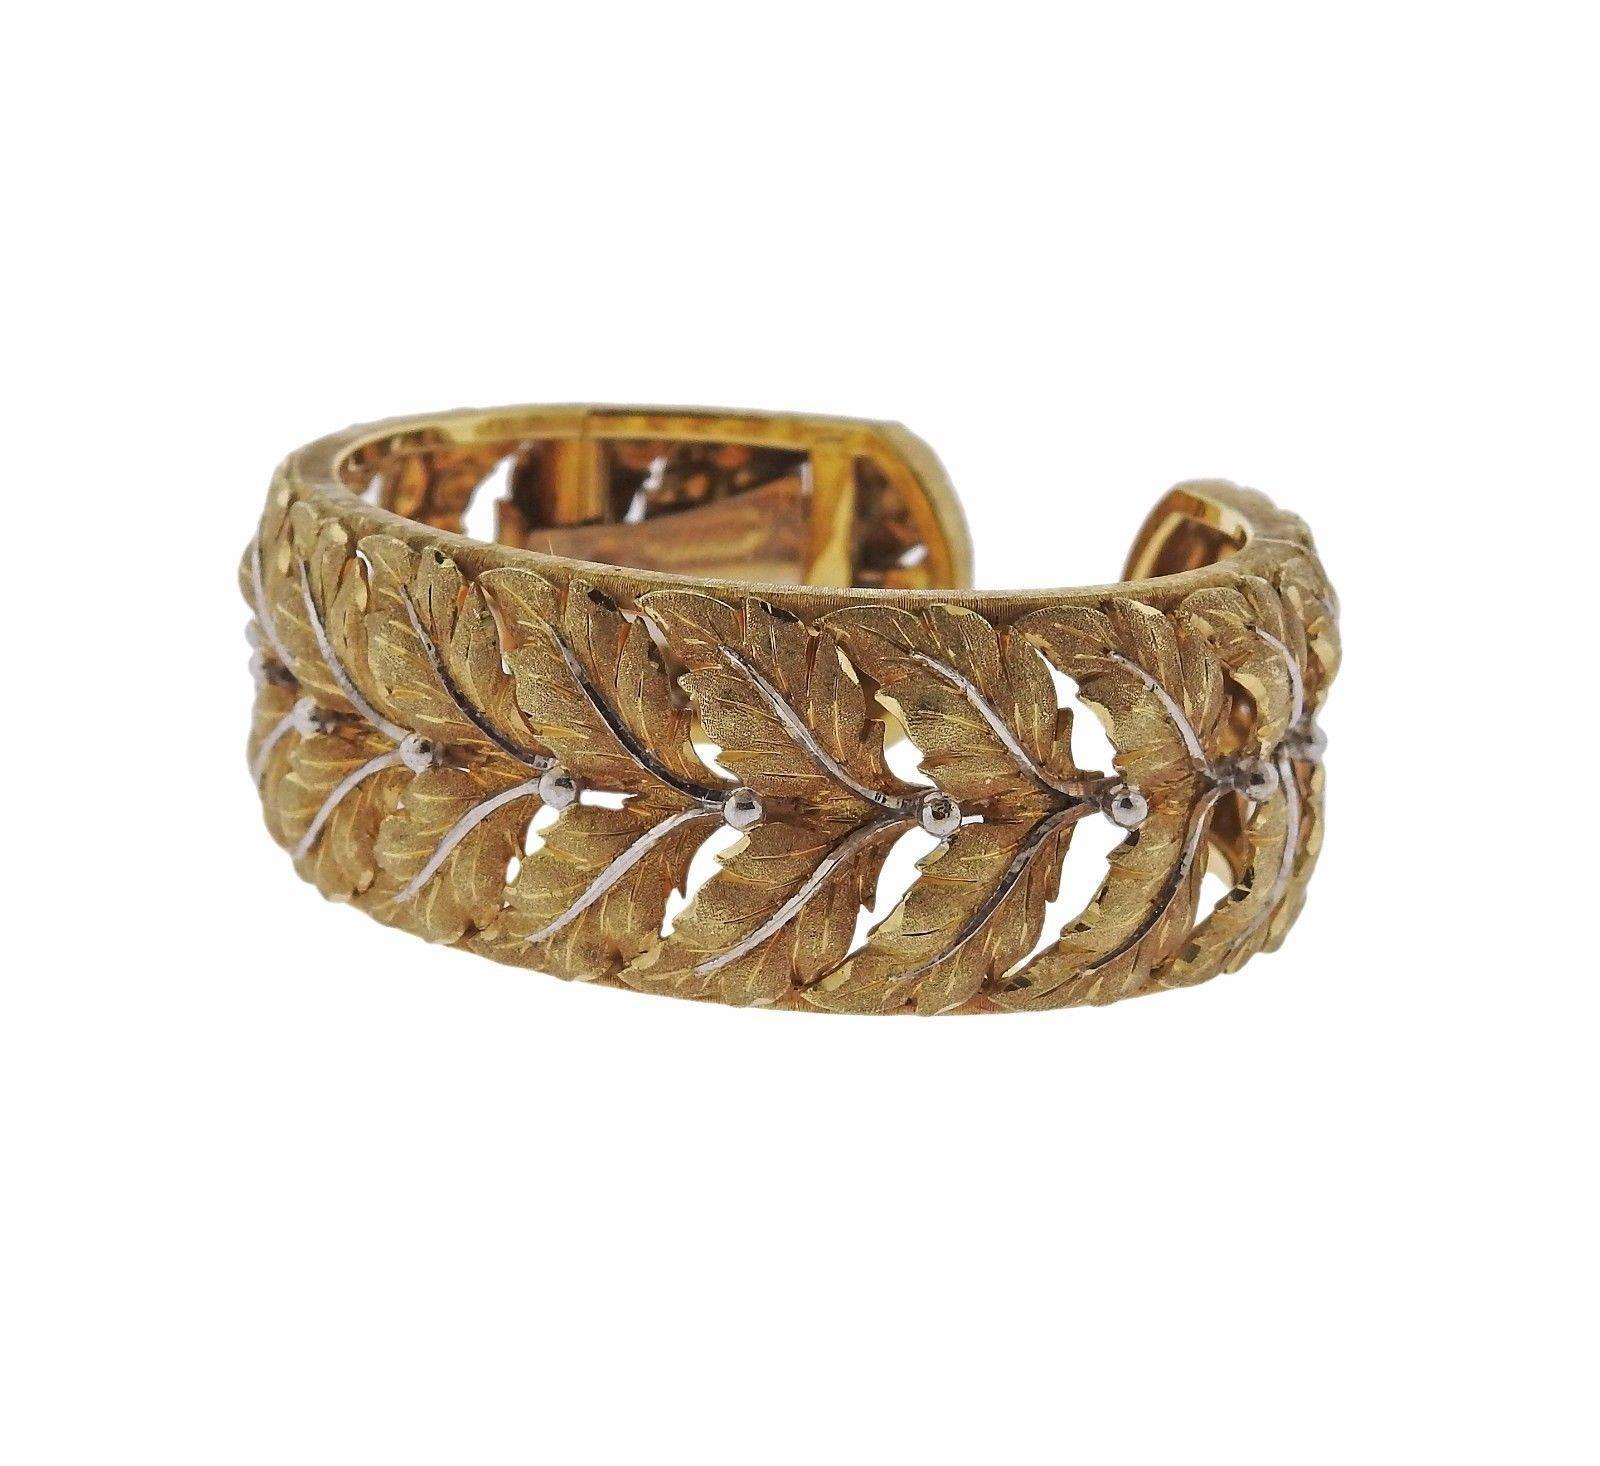 An 18k yellow gold bracelet by Buccellati.  The bracelet will fit a 7